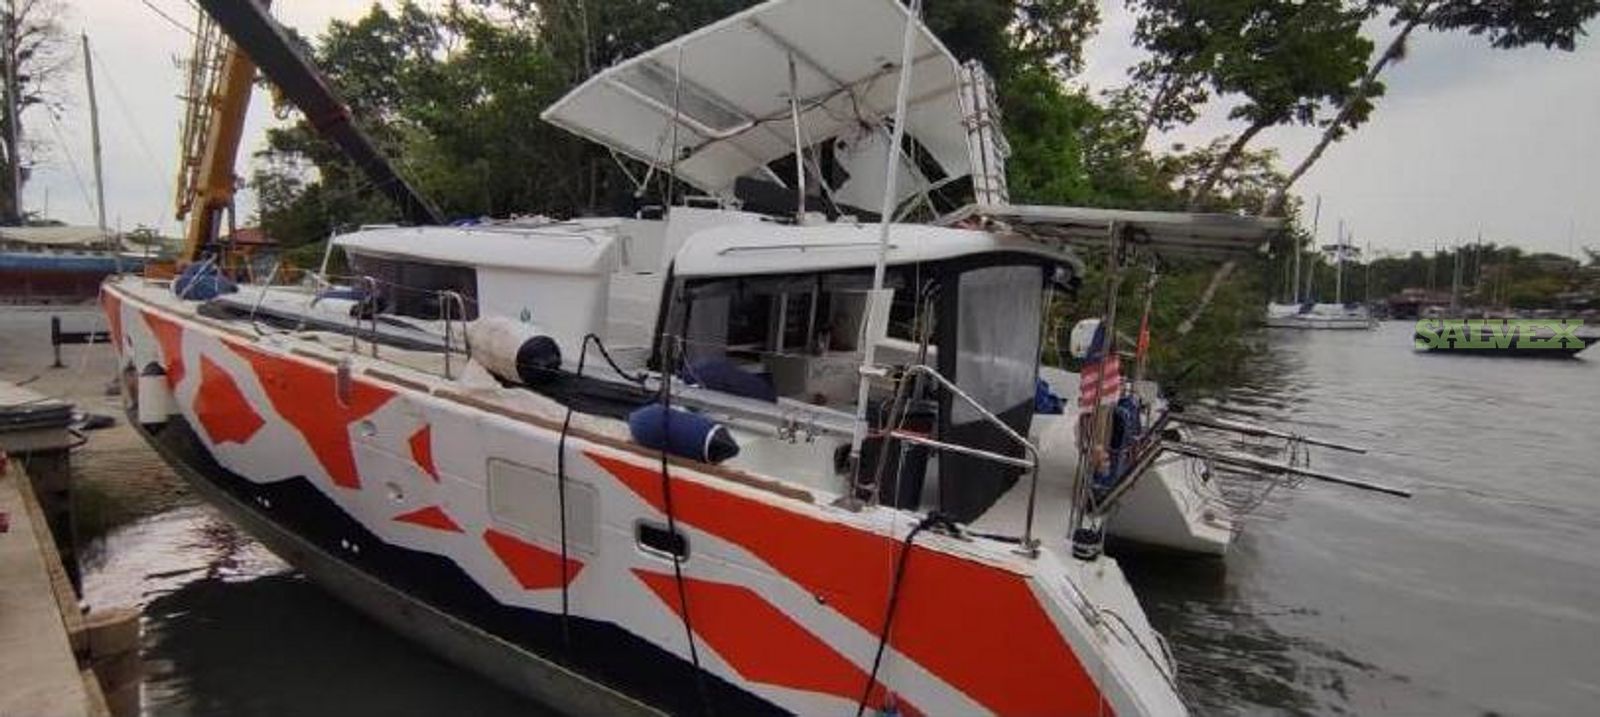 damaged catamaran for sale craigslist